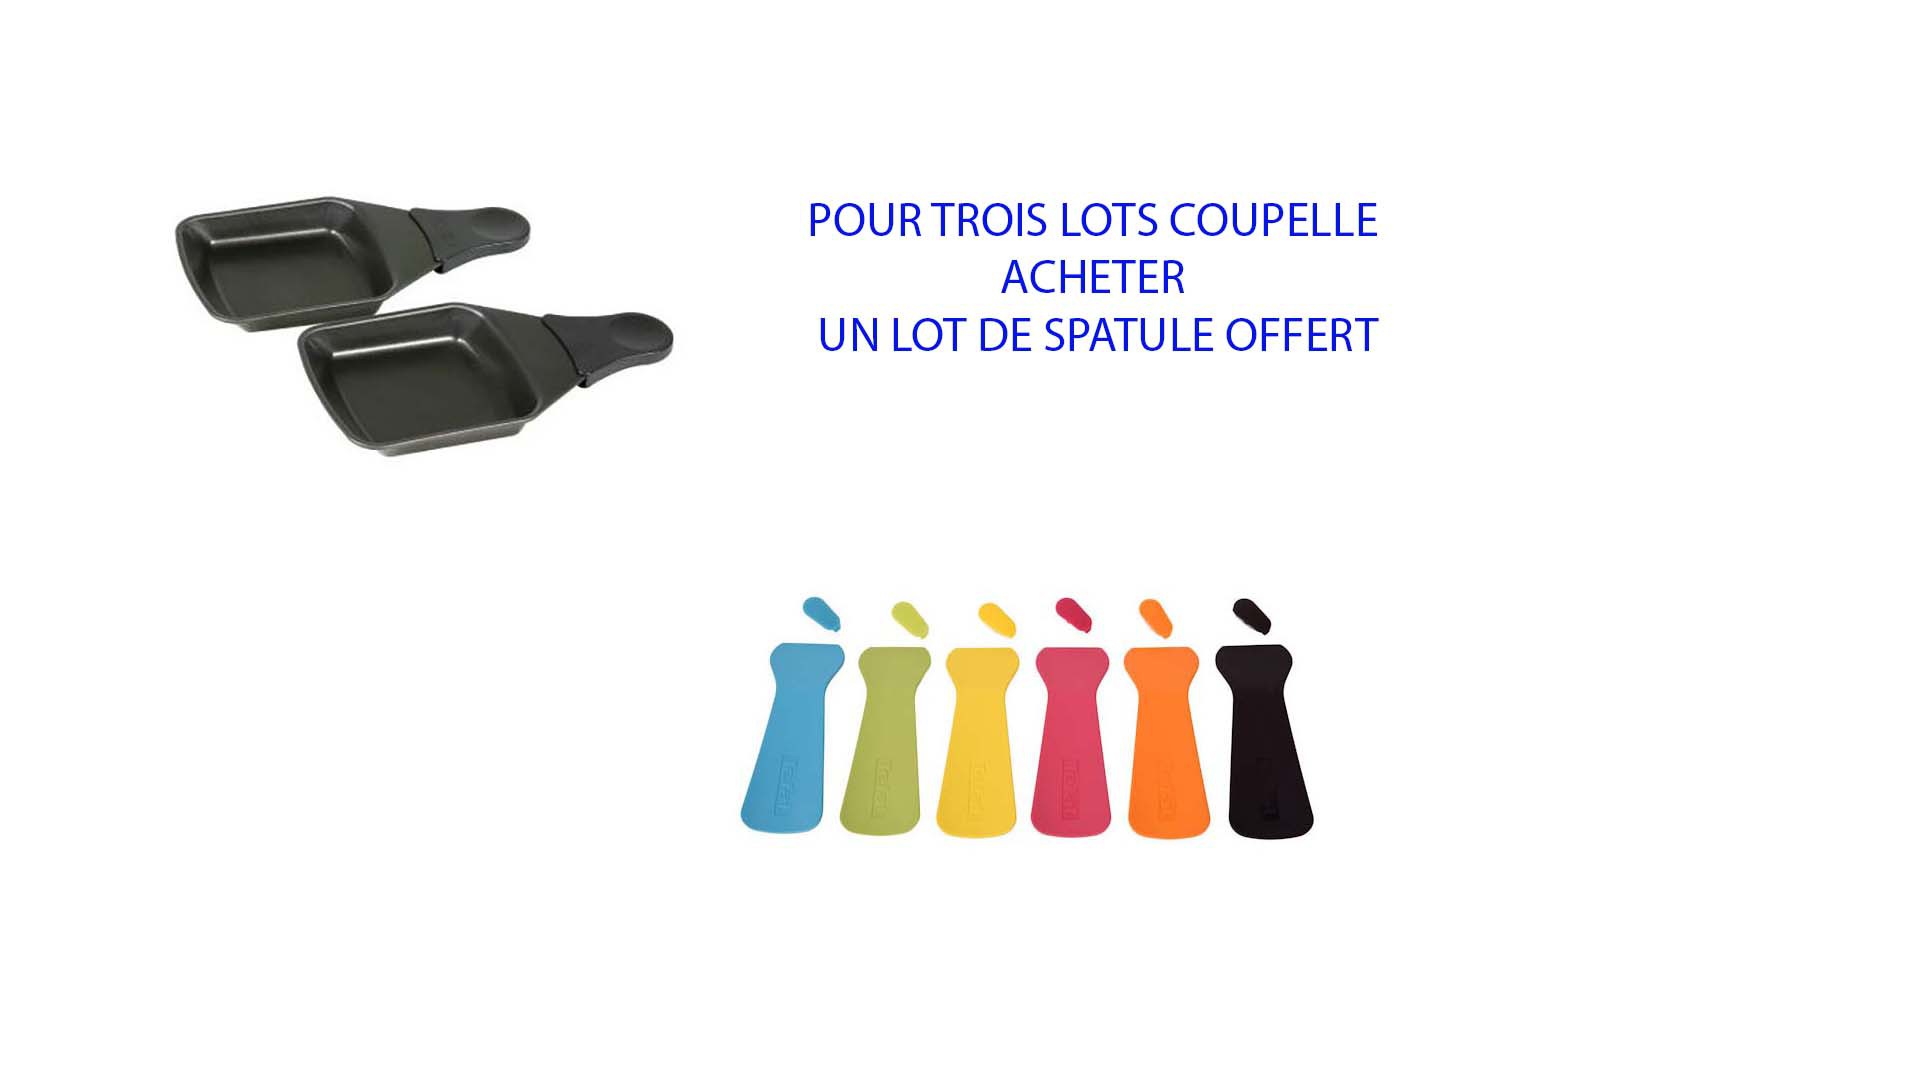 Coupelle raclette ovale TS-17924000